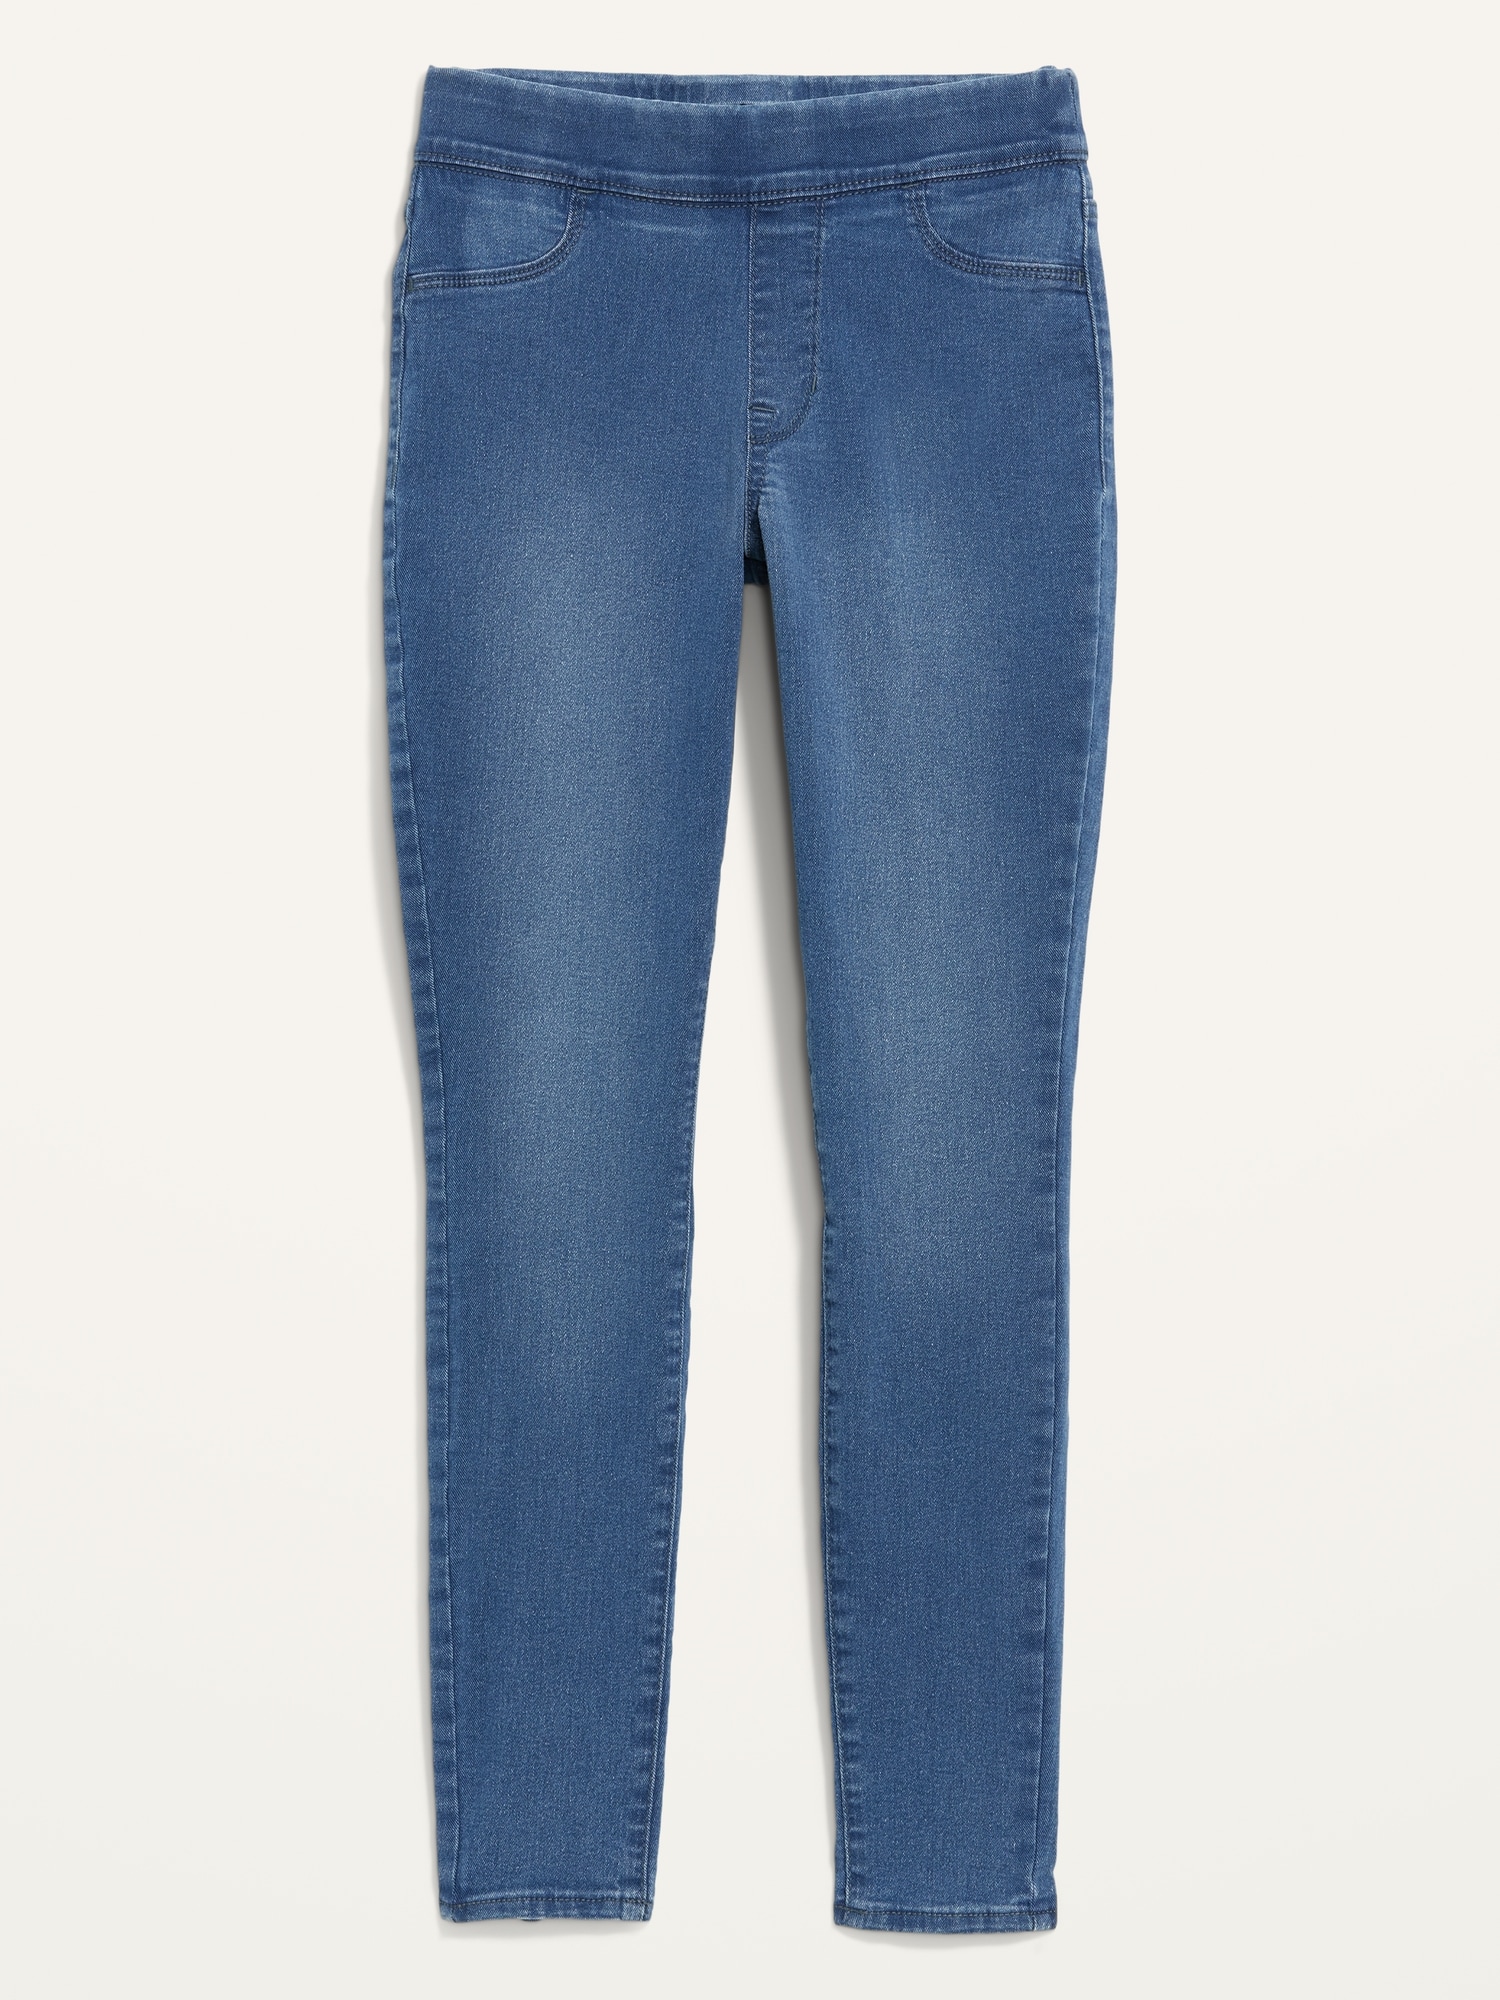 Time & Tru Jeggings Dark Wash Pull On Blue Jeans Womens M 8-10